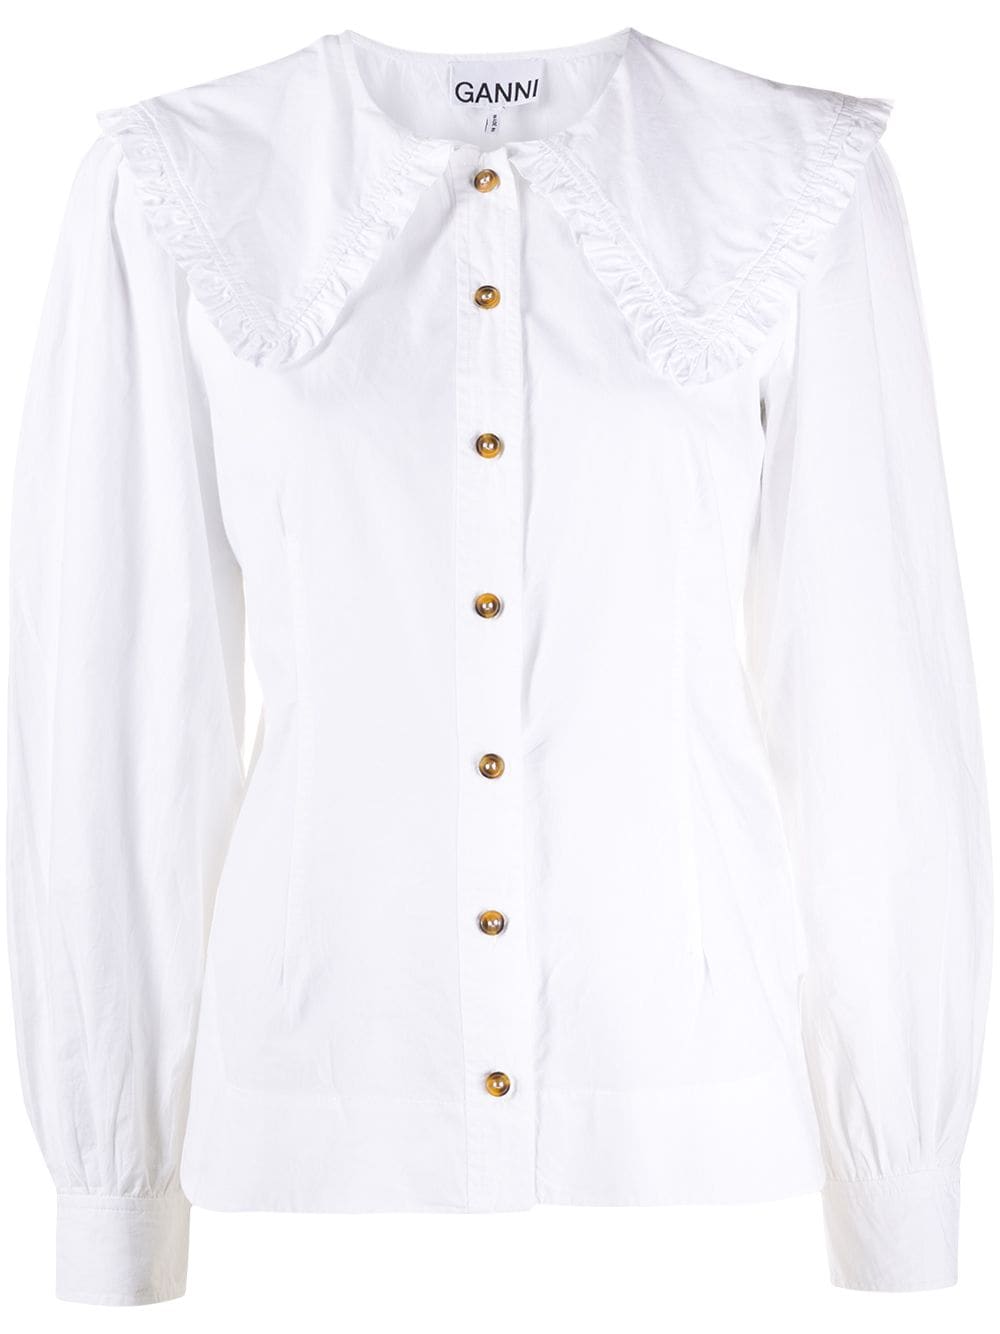 oversized-collar buttoned blouse - SHEET-1